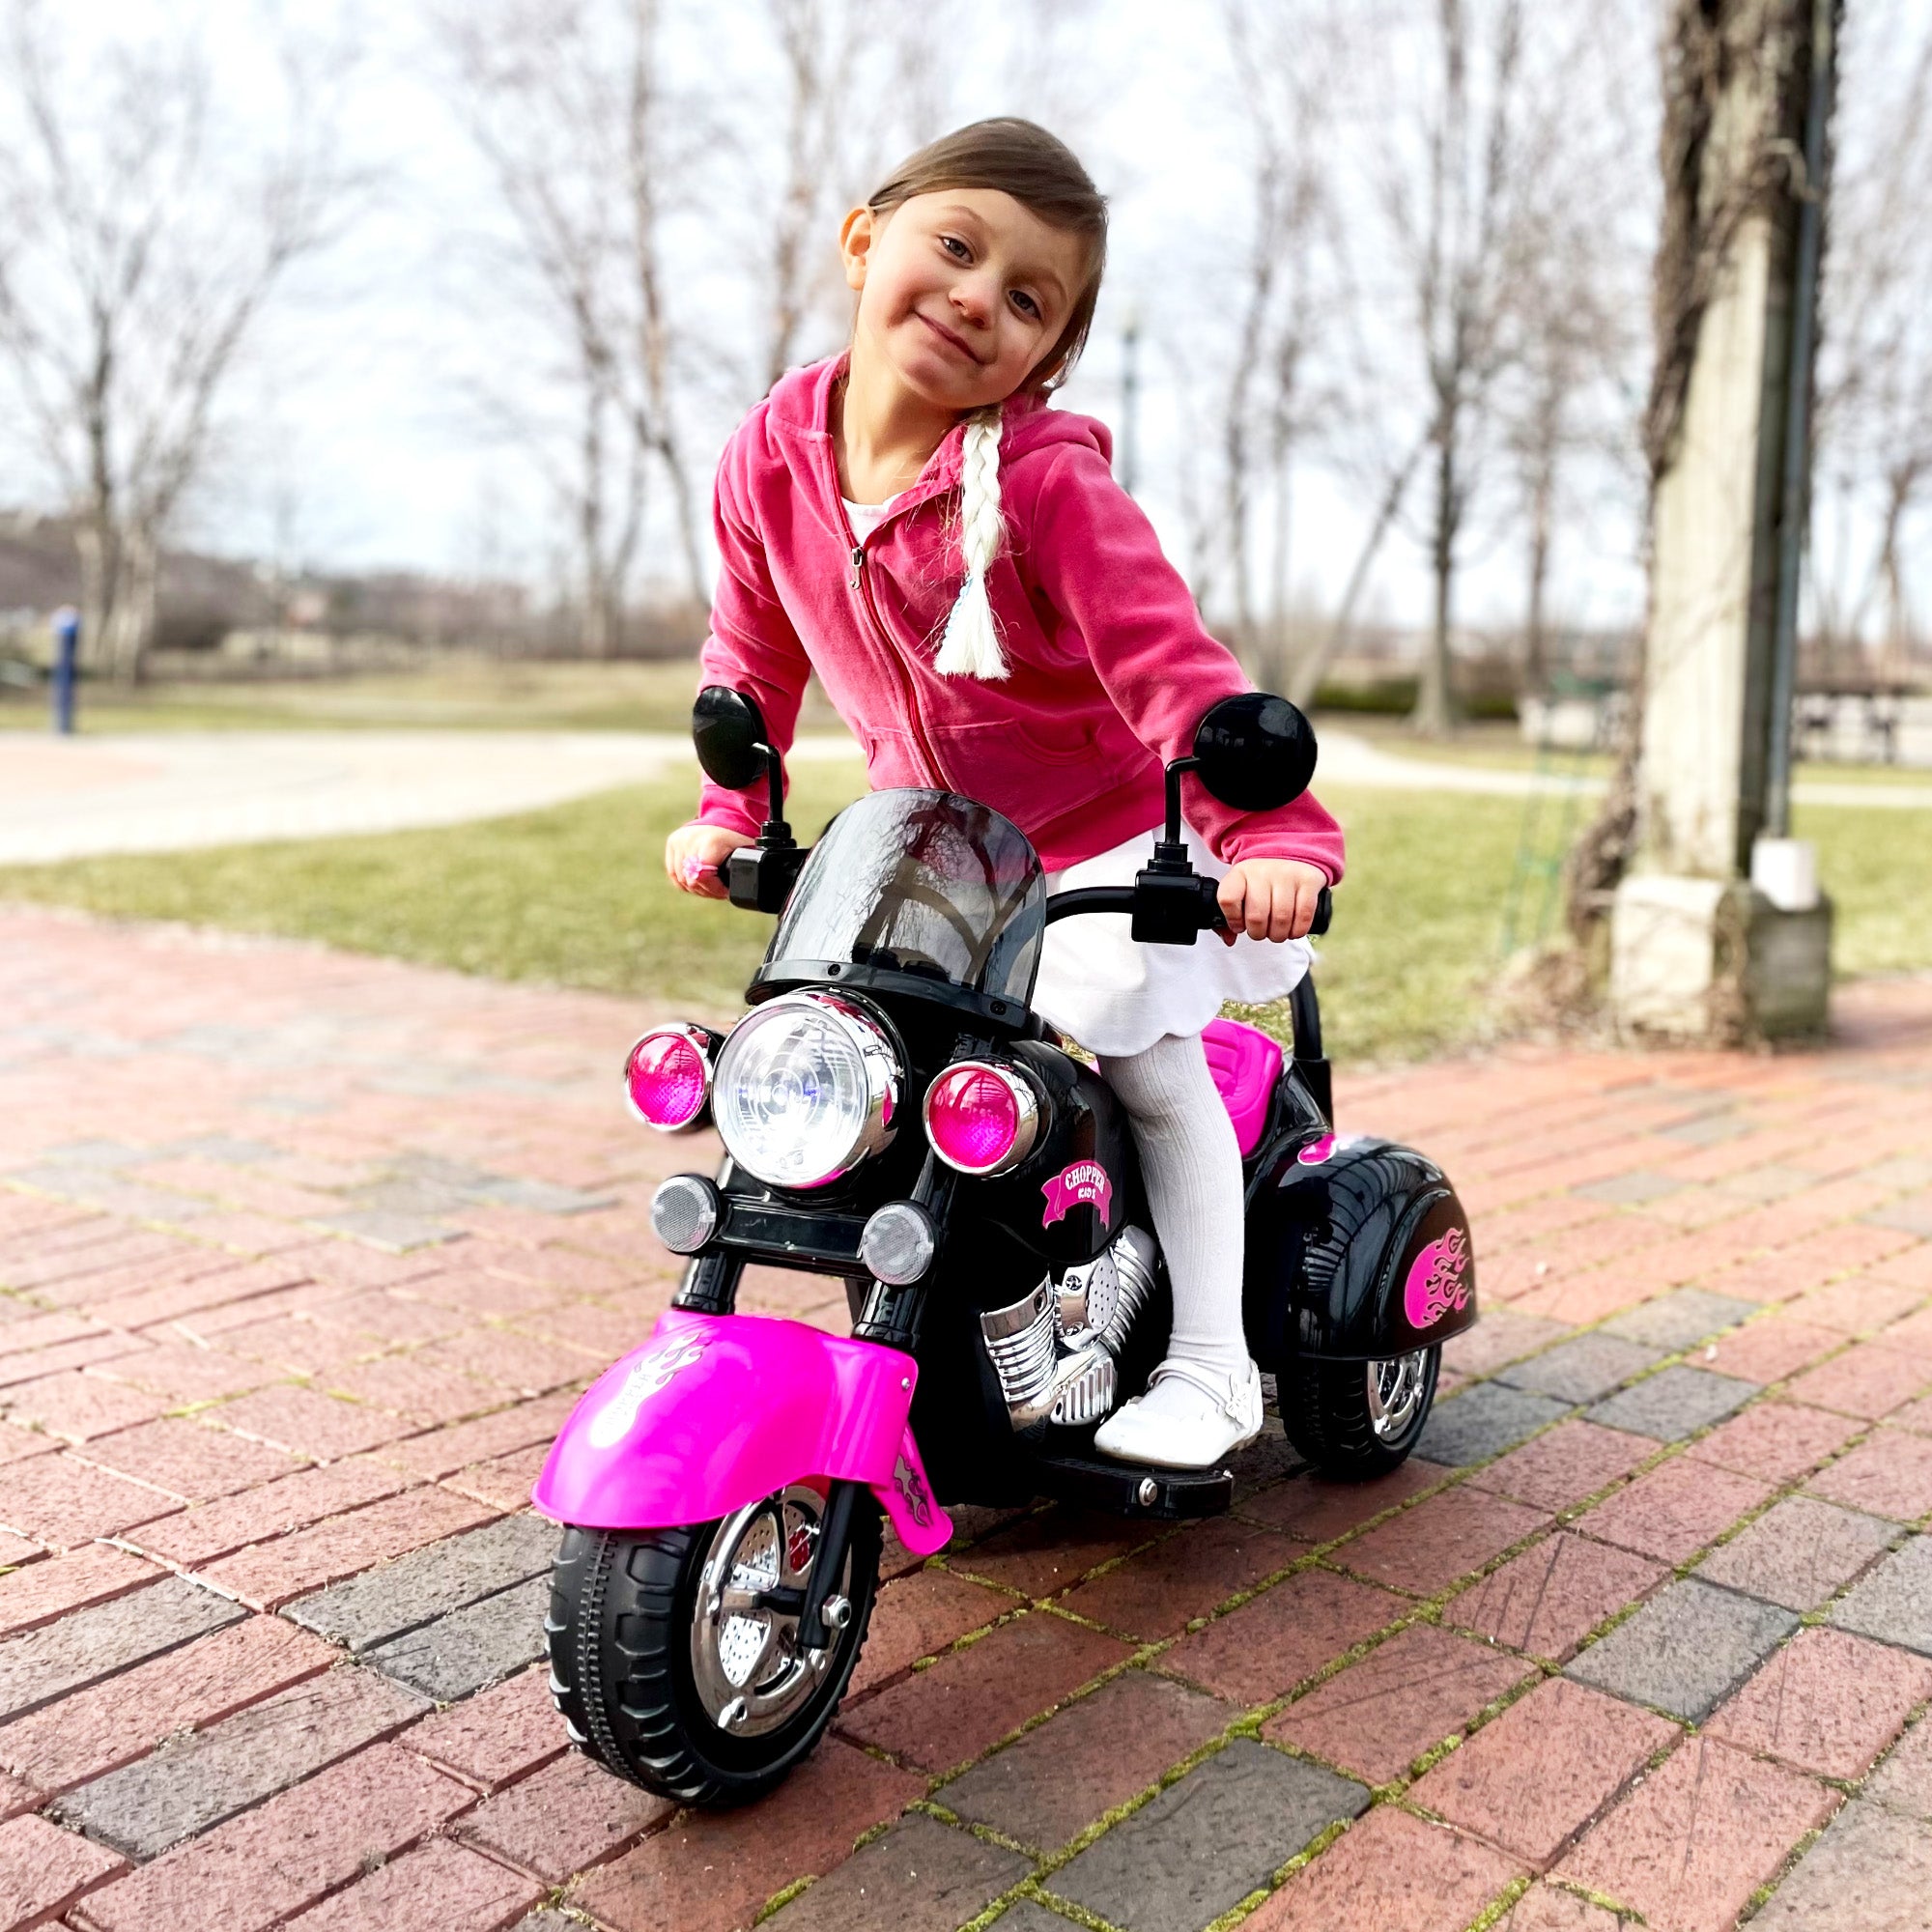 Pink ride on motorcycle kids toys